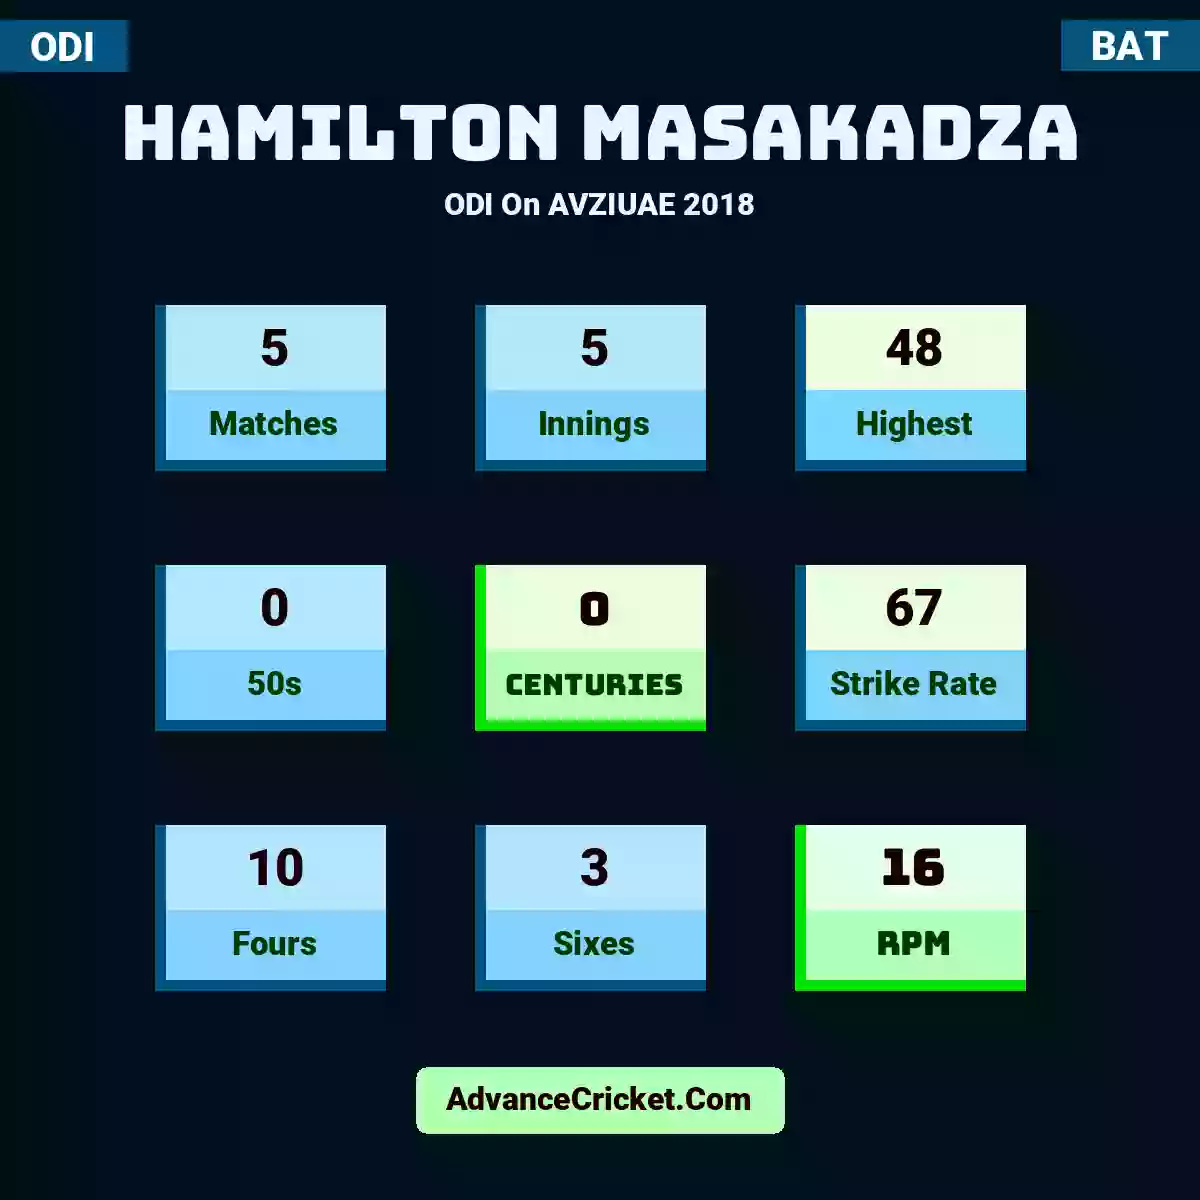 Hamilton Masakadza ODI  On AVZIUAE 2018, Hamilton Masakadza played 5 matches, scored 48 runs as highest, 0 half-centuries, and 0 centuries, with a strike rate of 67. H.Masakadza hit 10 fours and 3 sixes, with an RPM of 16.